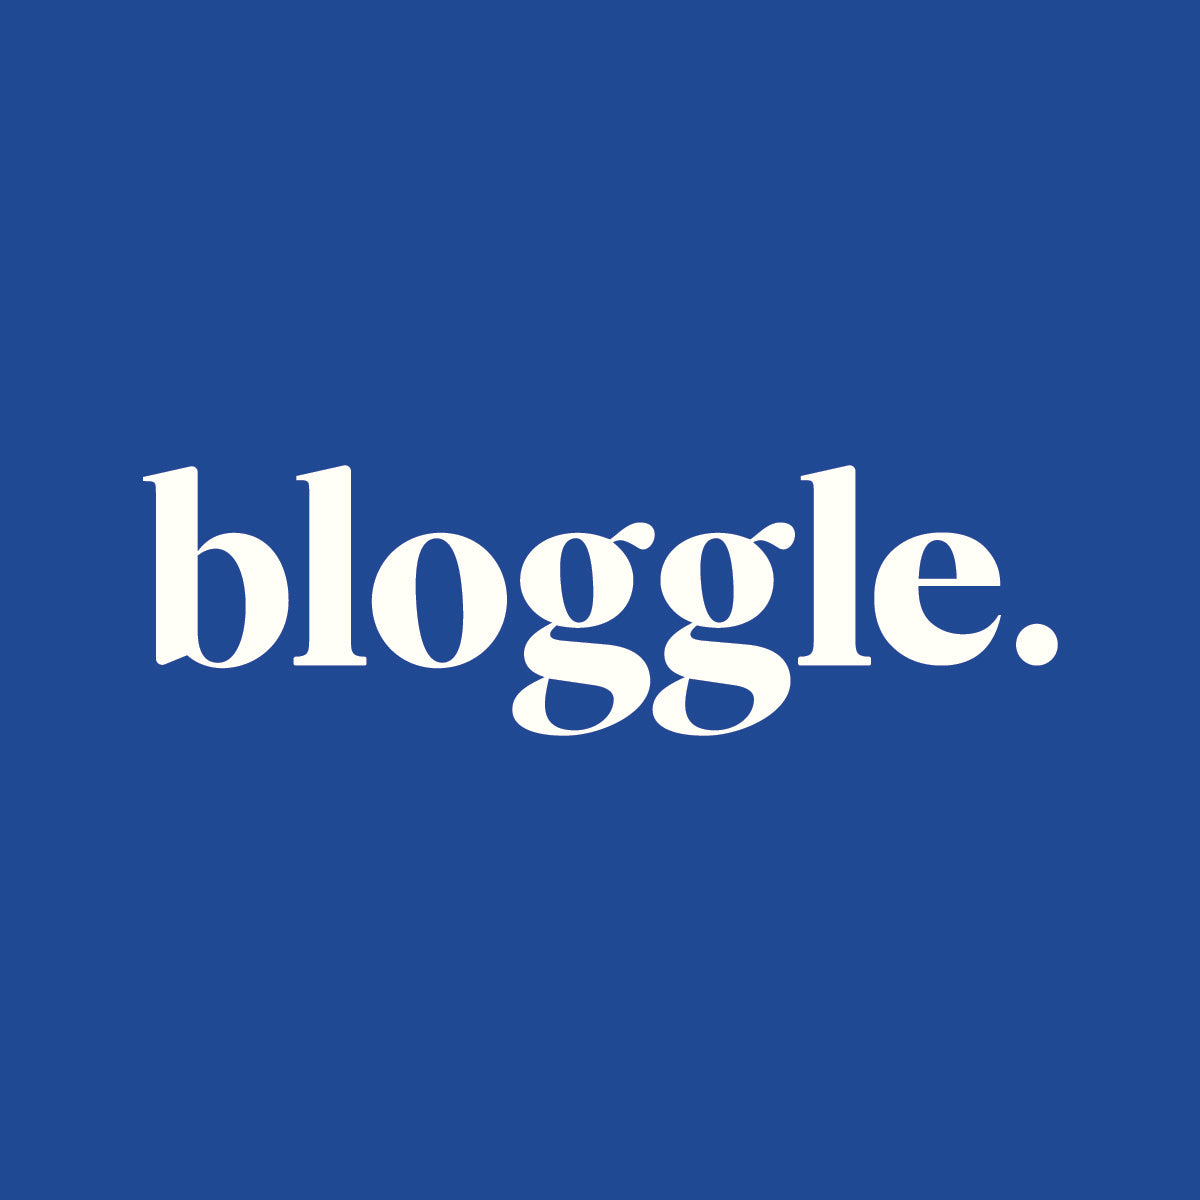 Bloggle